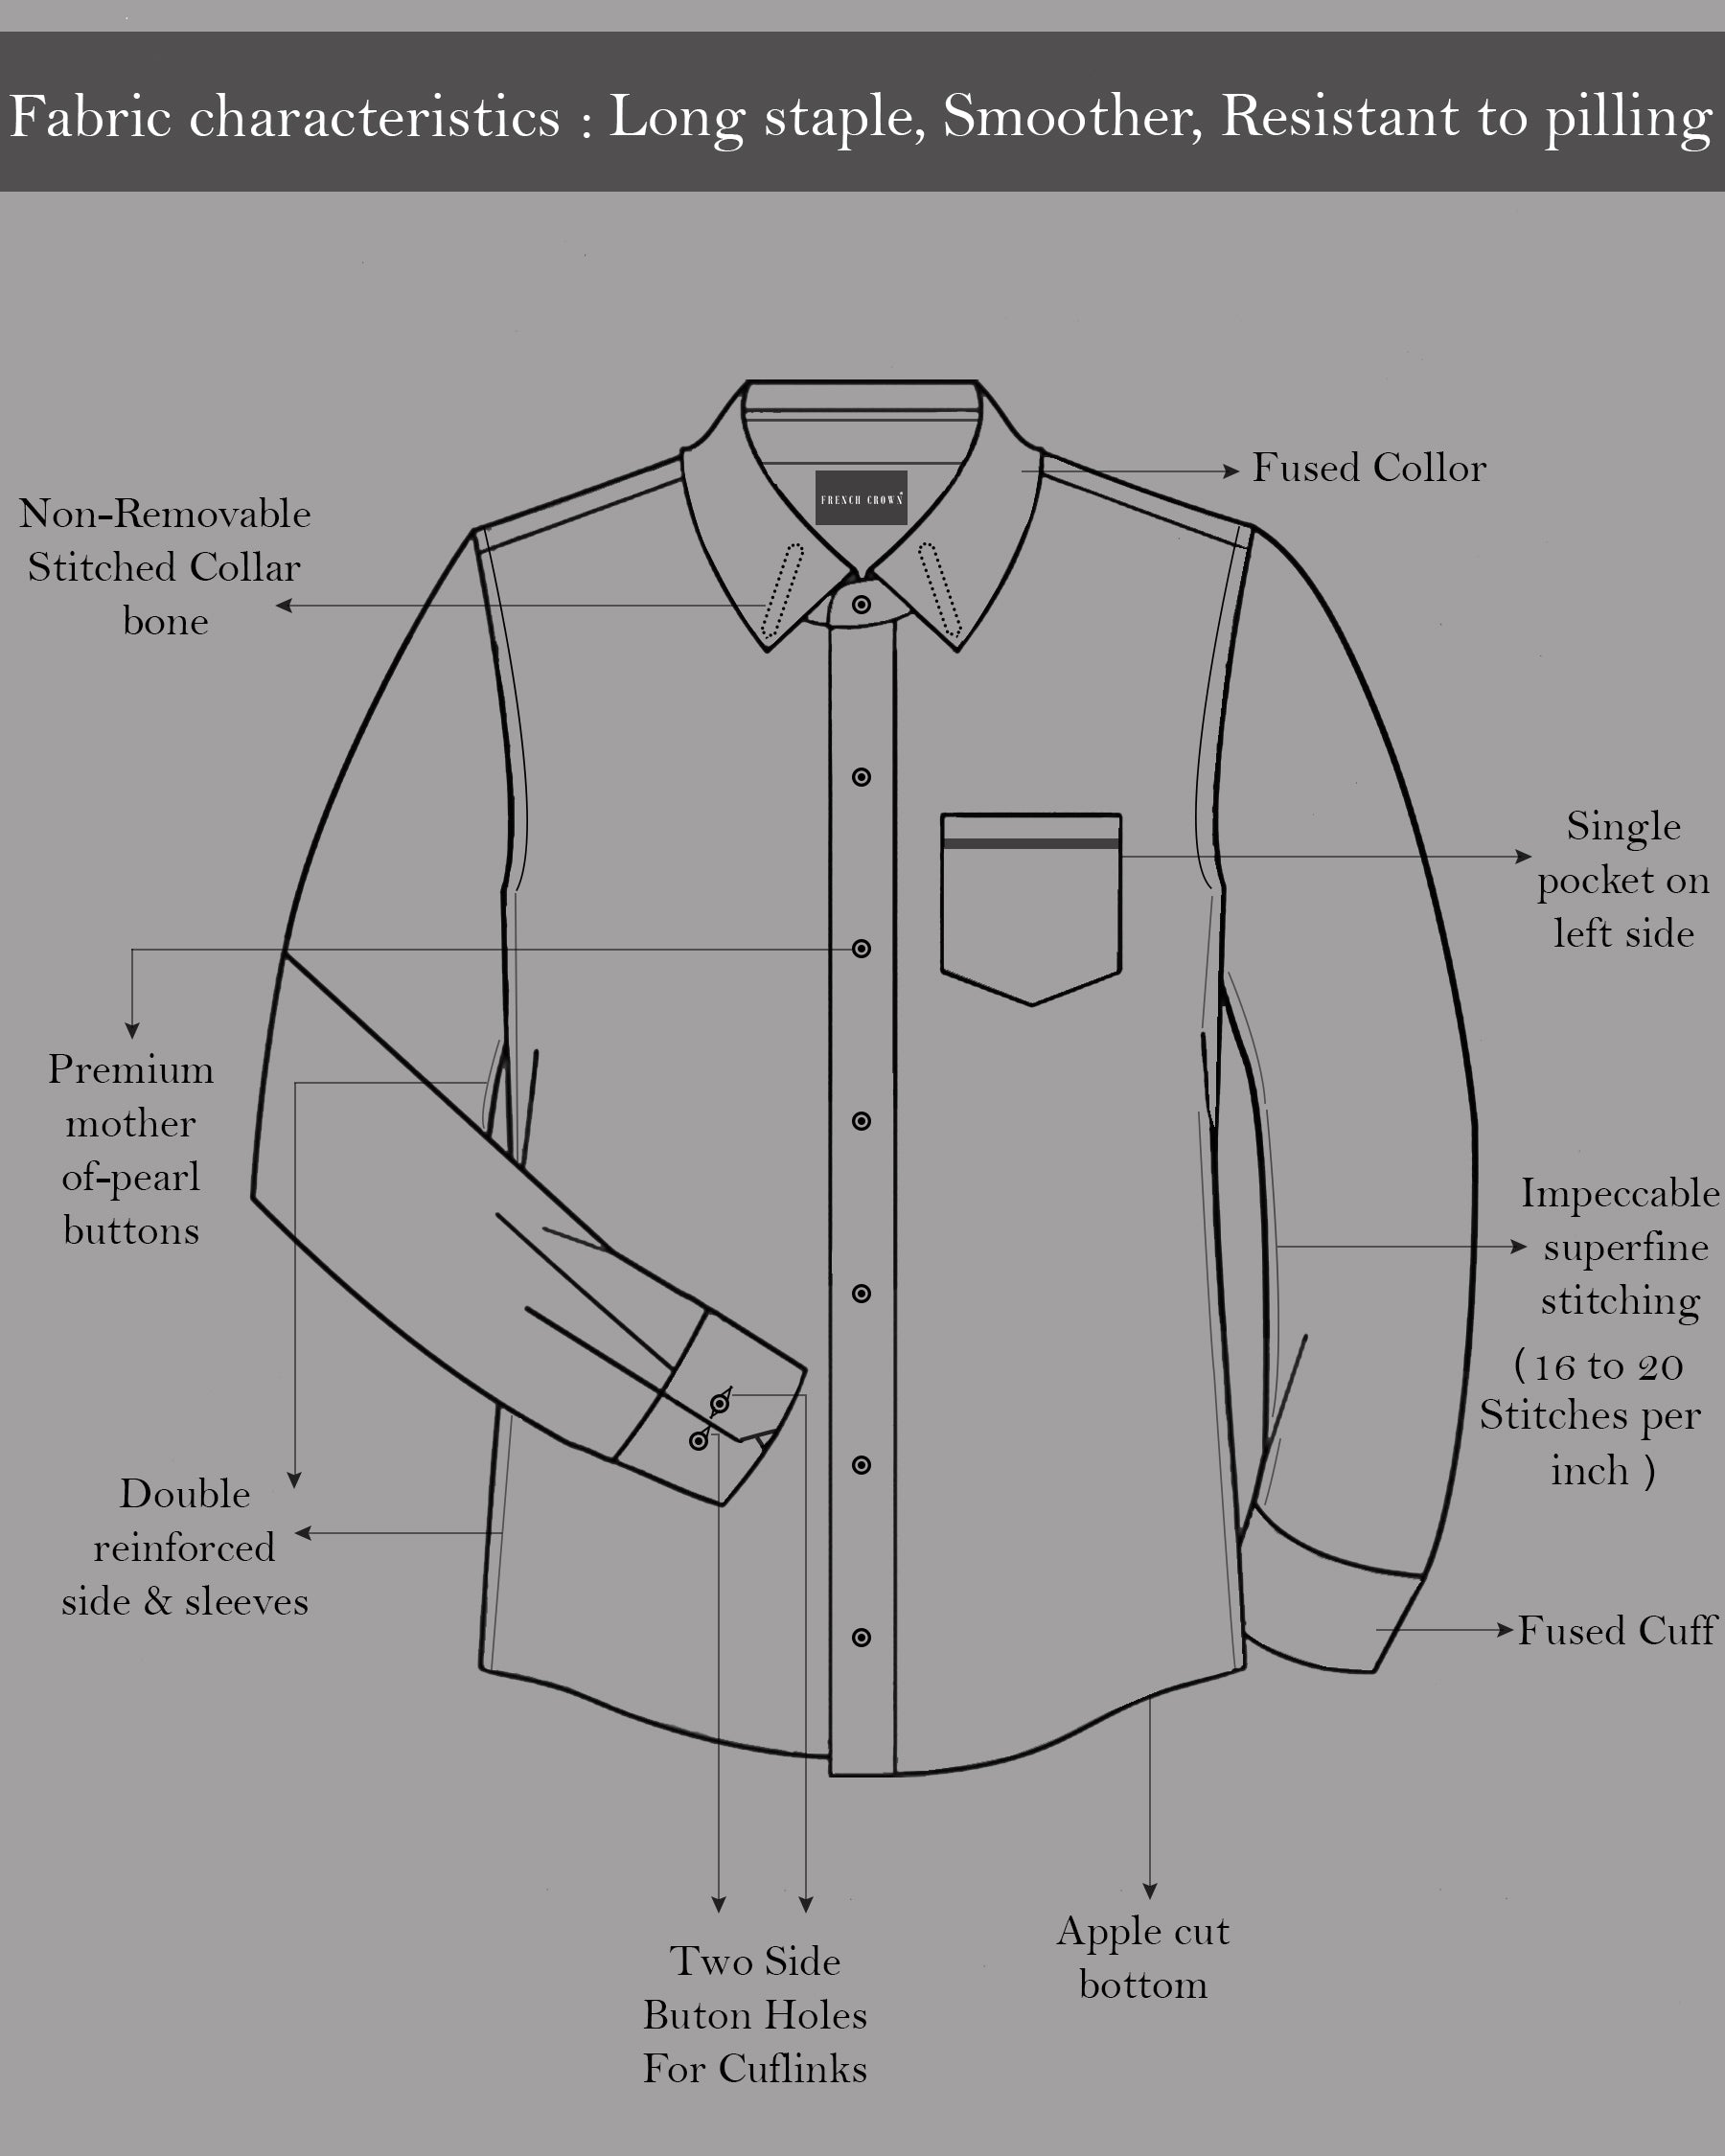 Meteorite Twill Checkered Premium Cotton Shirt